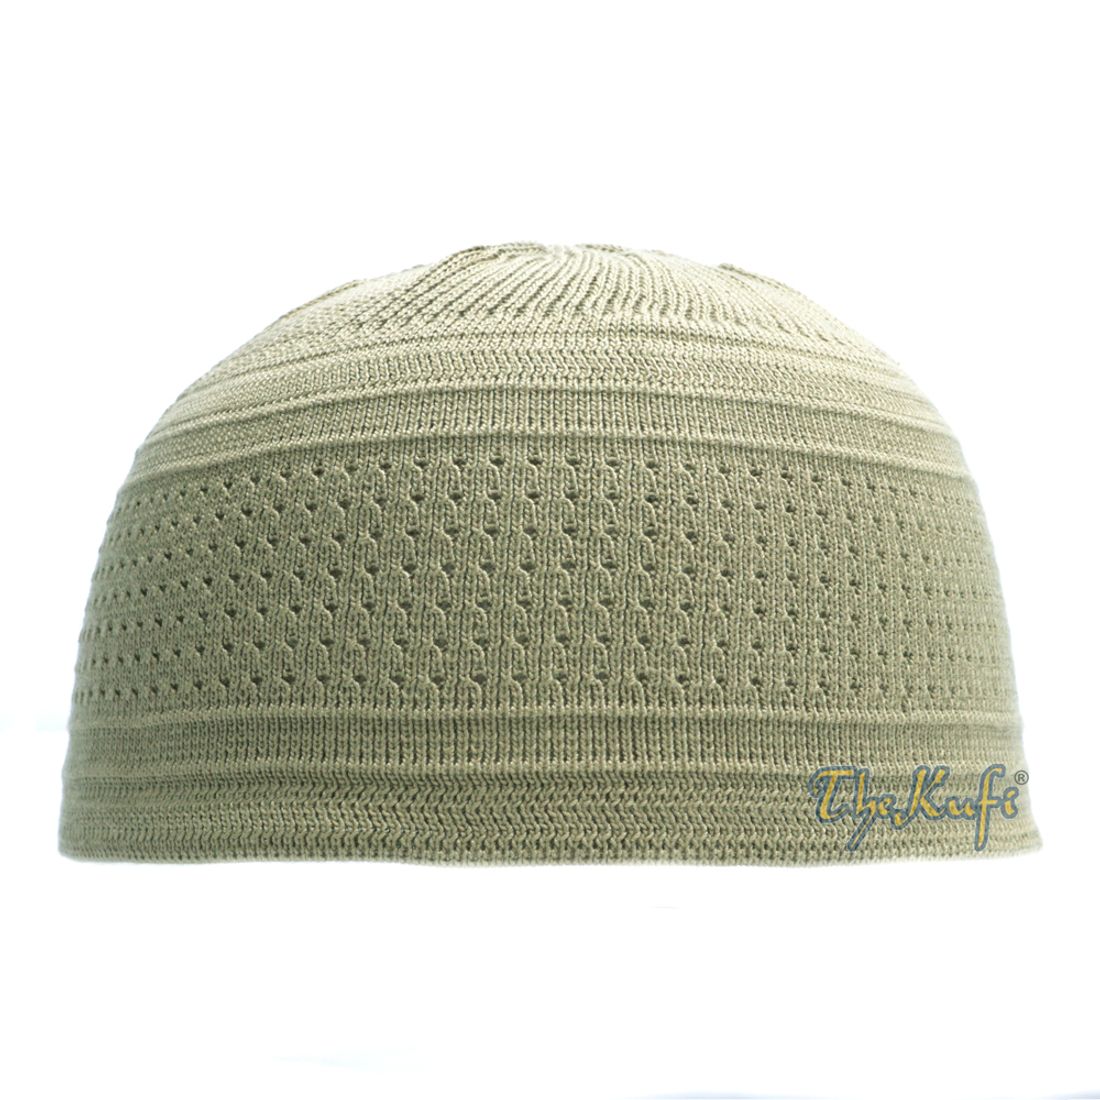 Khaki Cotton Stretch-knit Style Kufi Hat Beanie Skull Cap